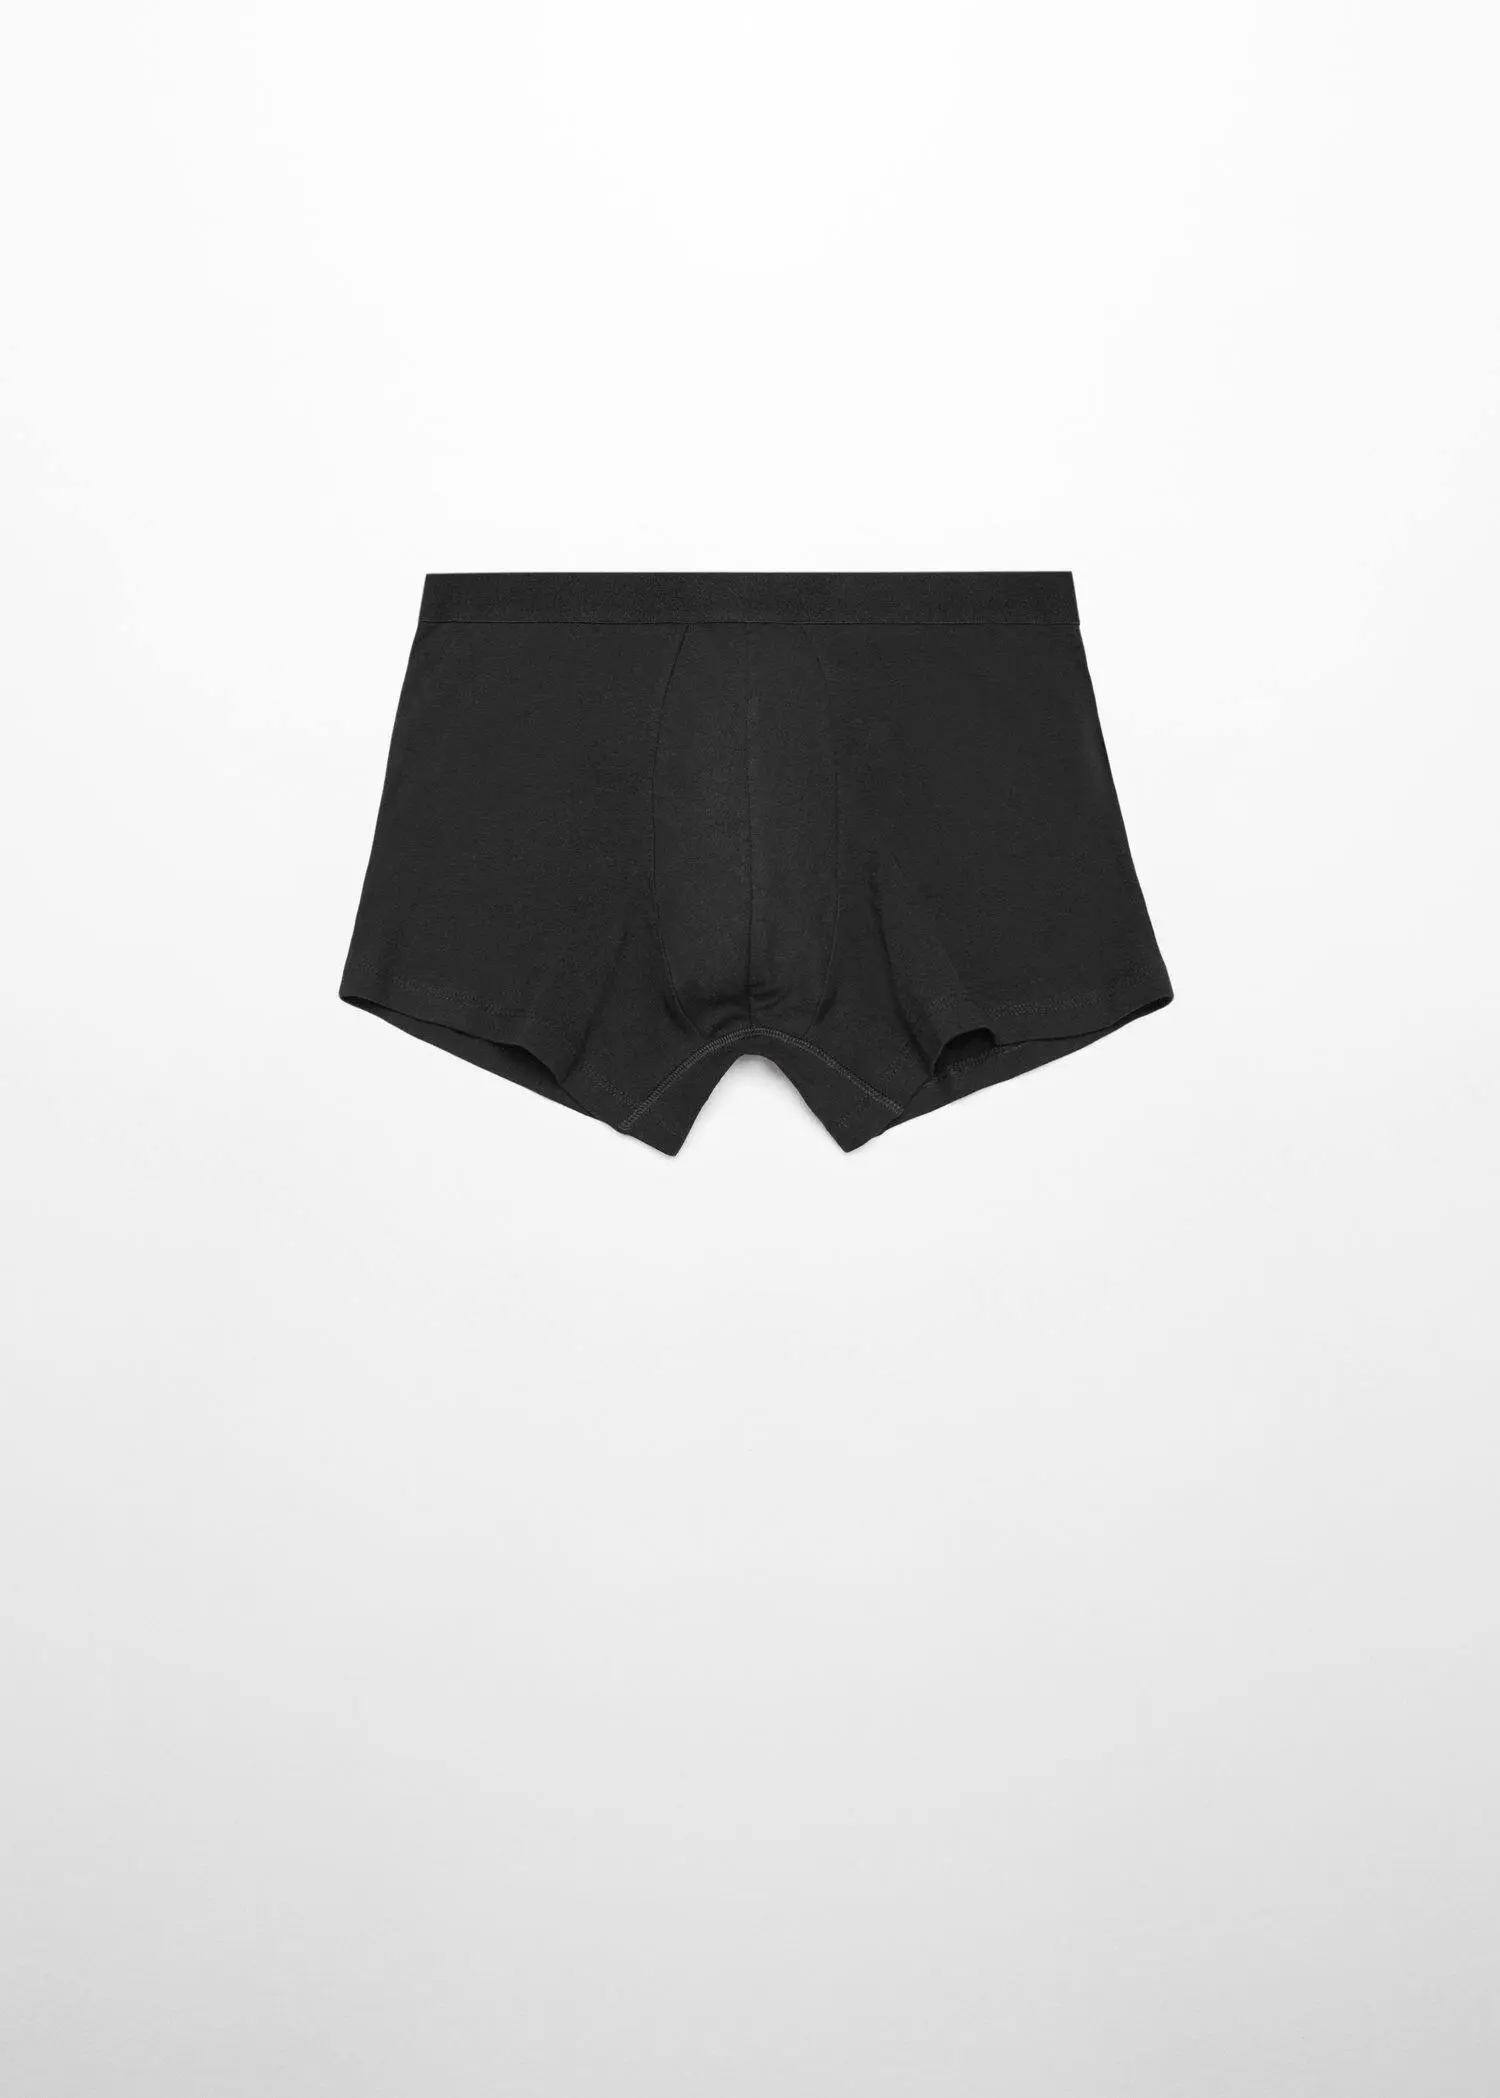 Mango 3-pack of black cotton boxer shorts. 2